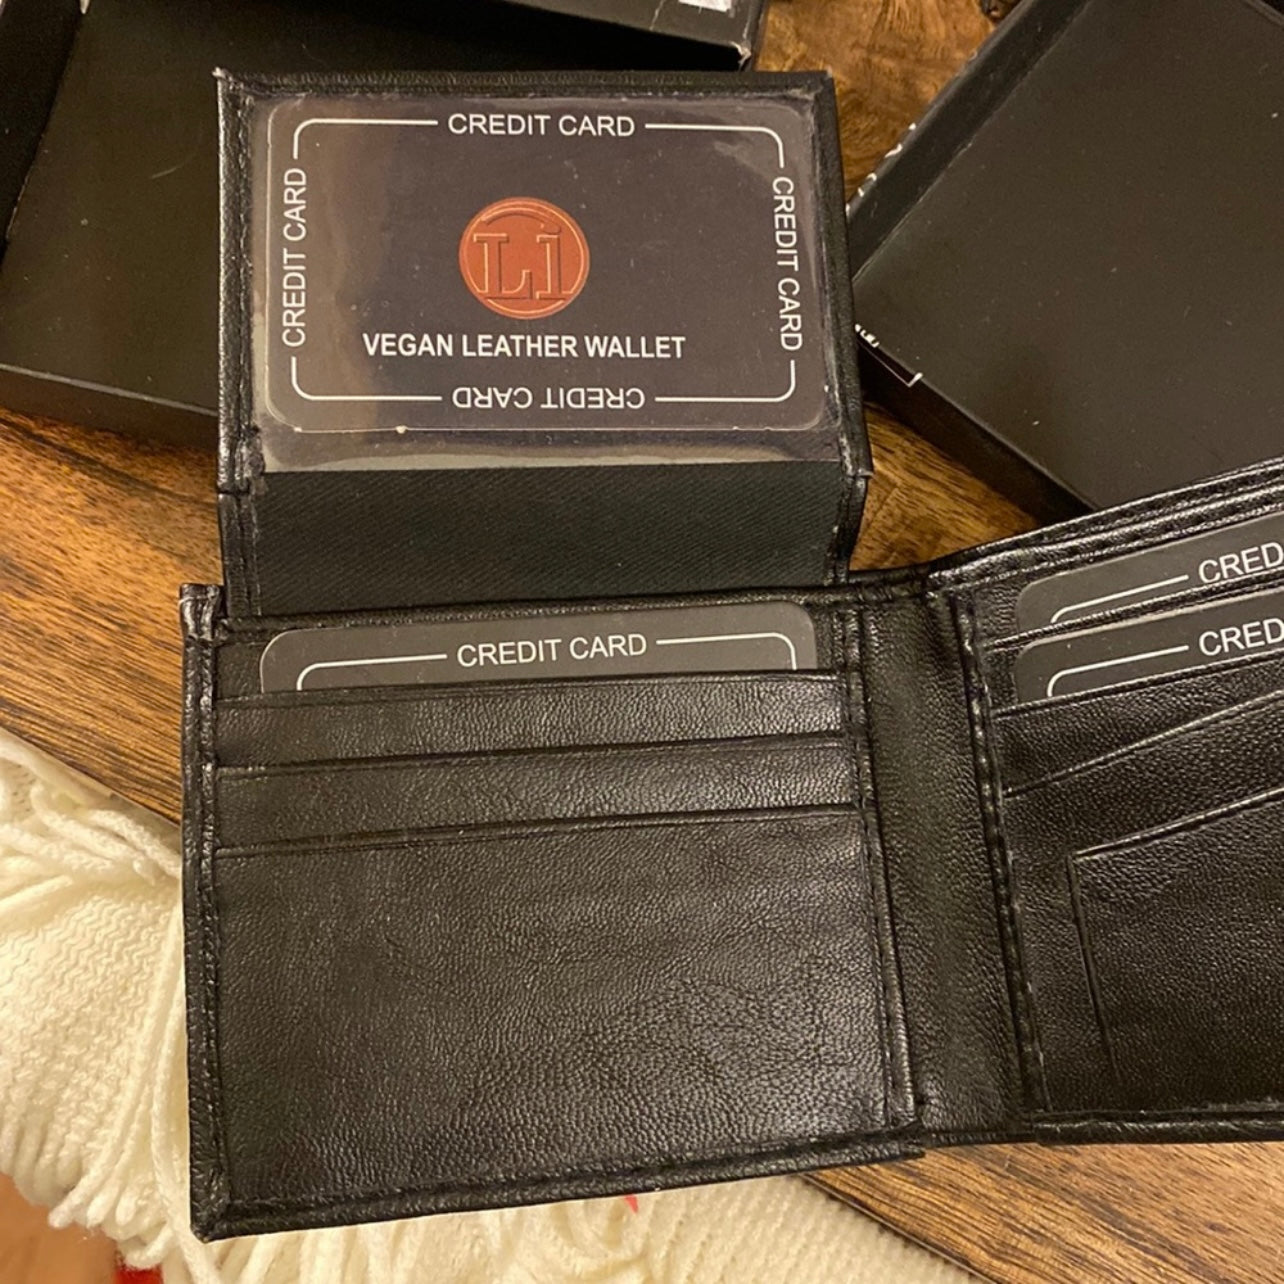 Boxed Men’s Vegan Leather Wallet